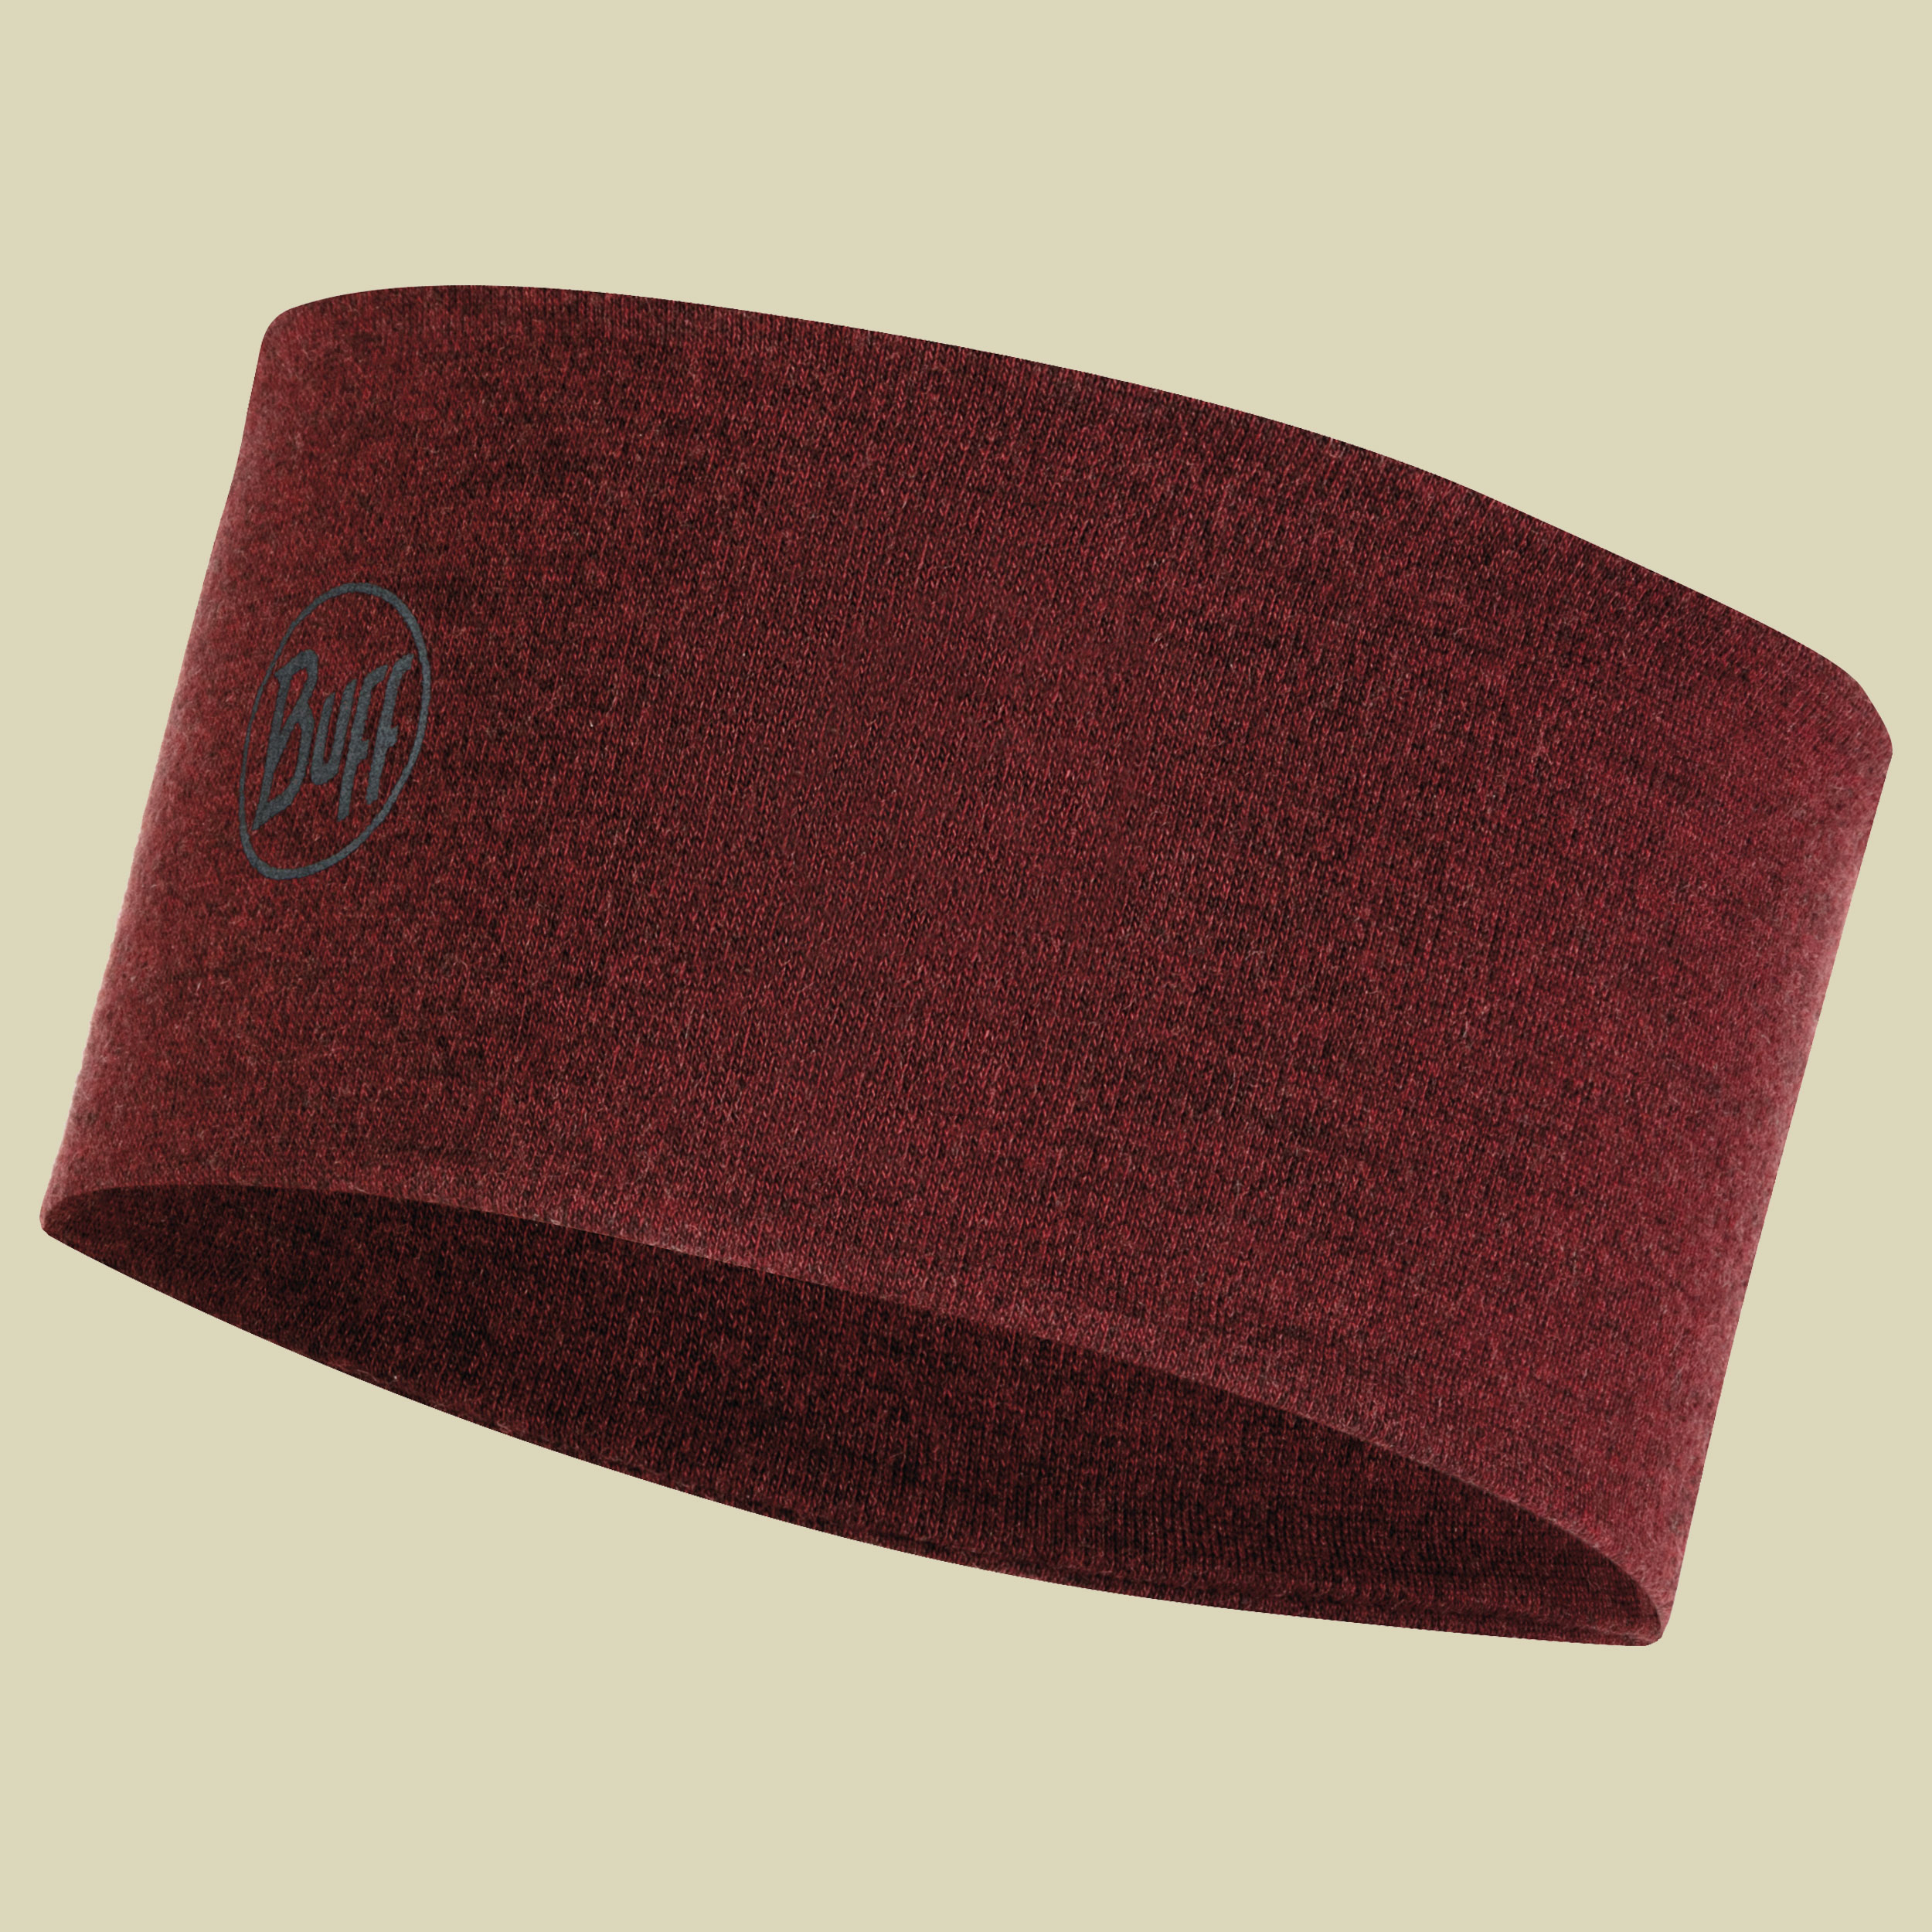 2 Layers Midweight Merino Wool Headband Größe one size Farbe wine melange